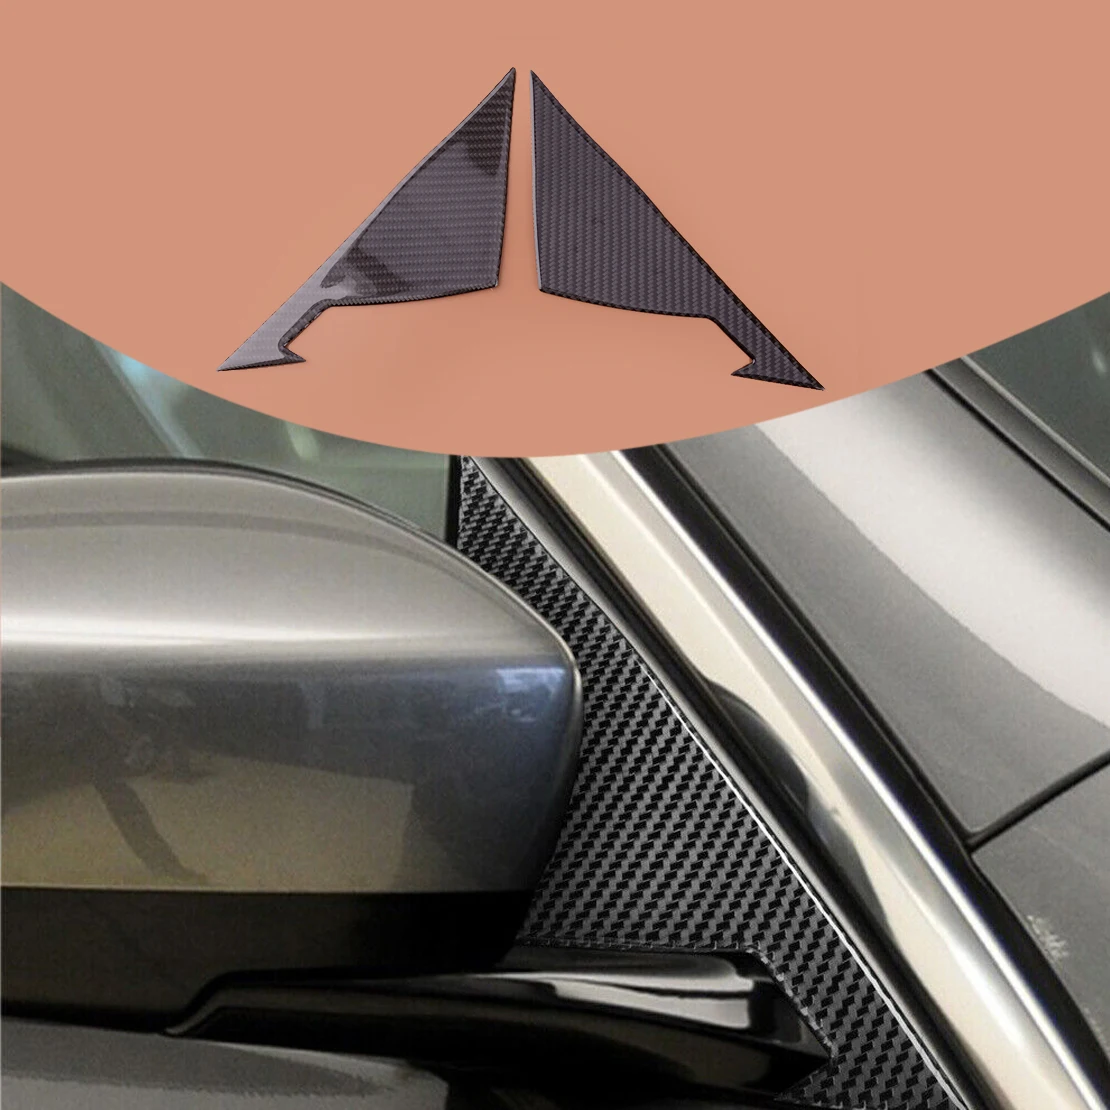 

Car Side Rearview Mirror A-Pillar Panel Cover Fit for Infiniti G37 Sedan 2007 2008 2009 2010 2011 2012 2013 Black Carbon Fiber